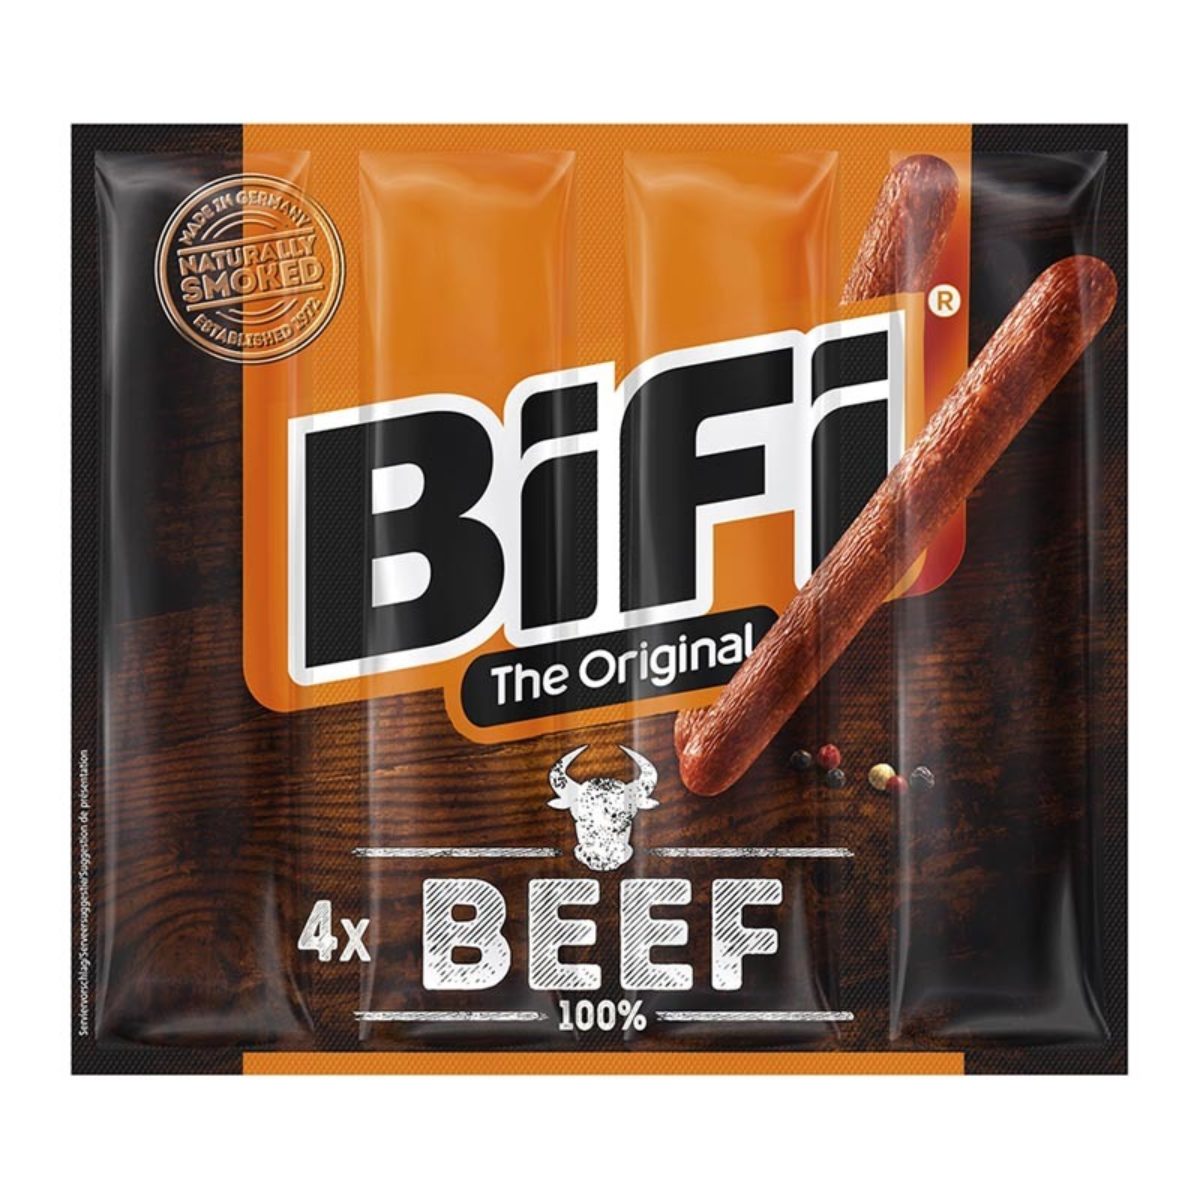 Bifi Beef Original 4x20g